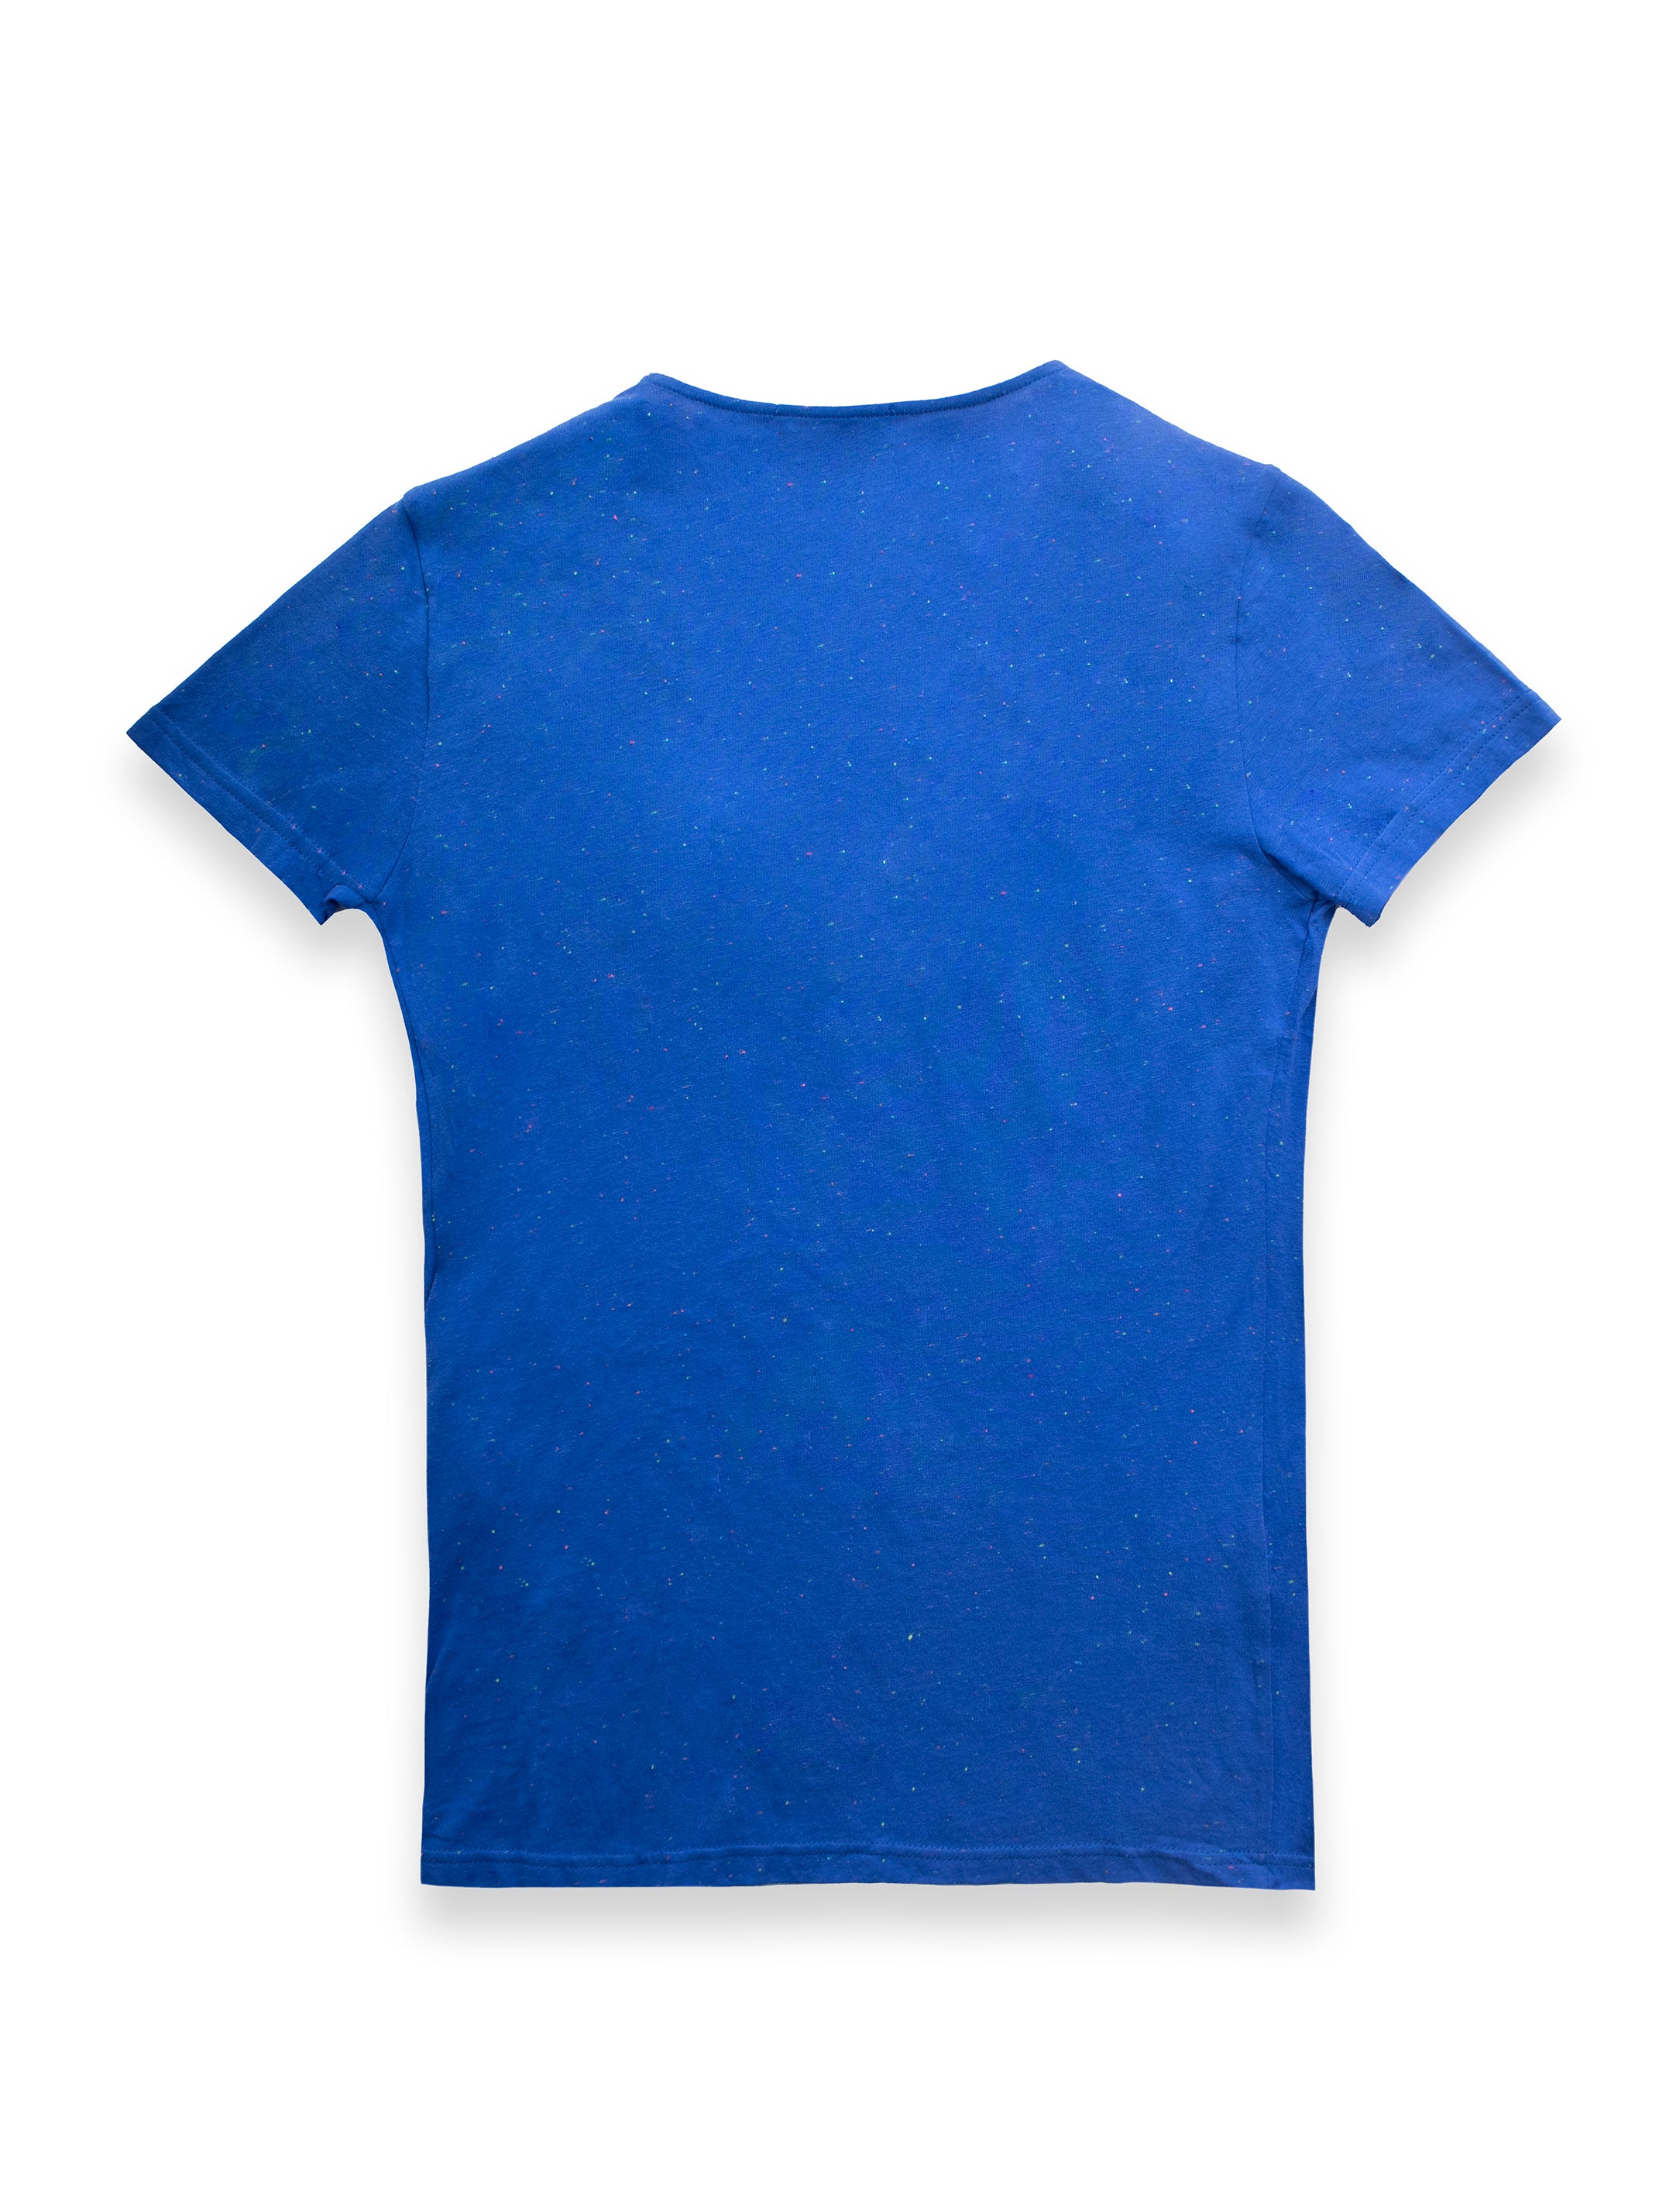 Blue T-Shirt Colourful Speckled Details